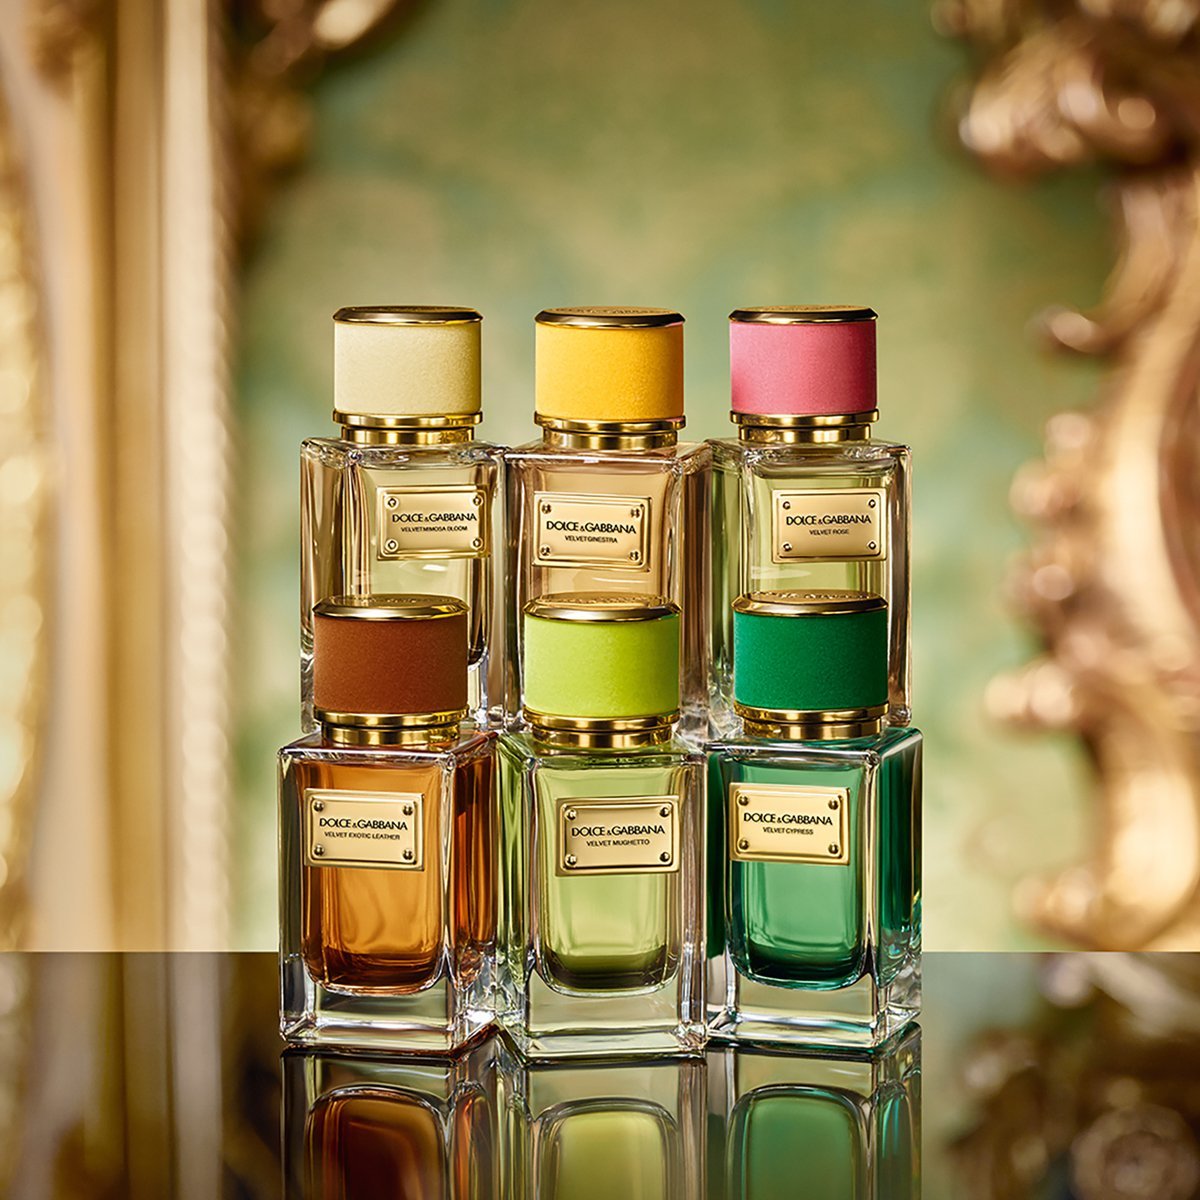 Dolce&Gabbana Beauty выпустил новый цветочный аромат Velvet Mughetto